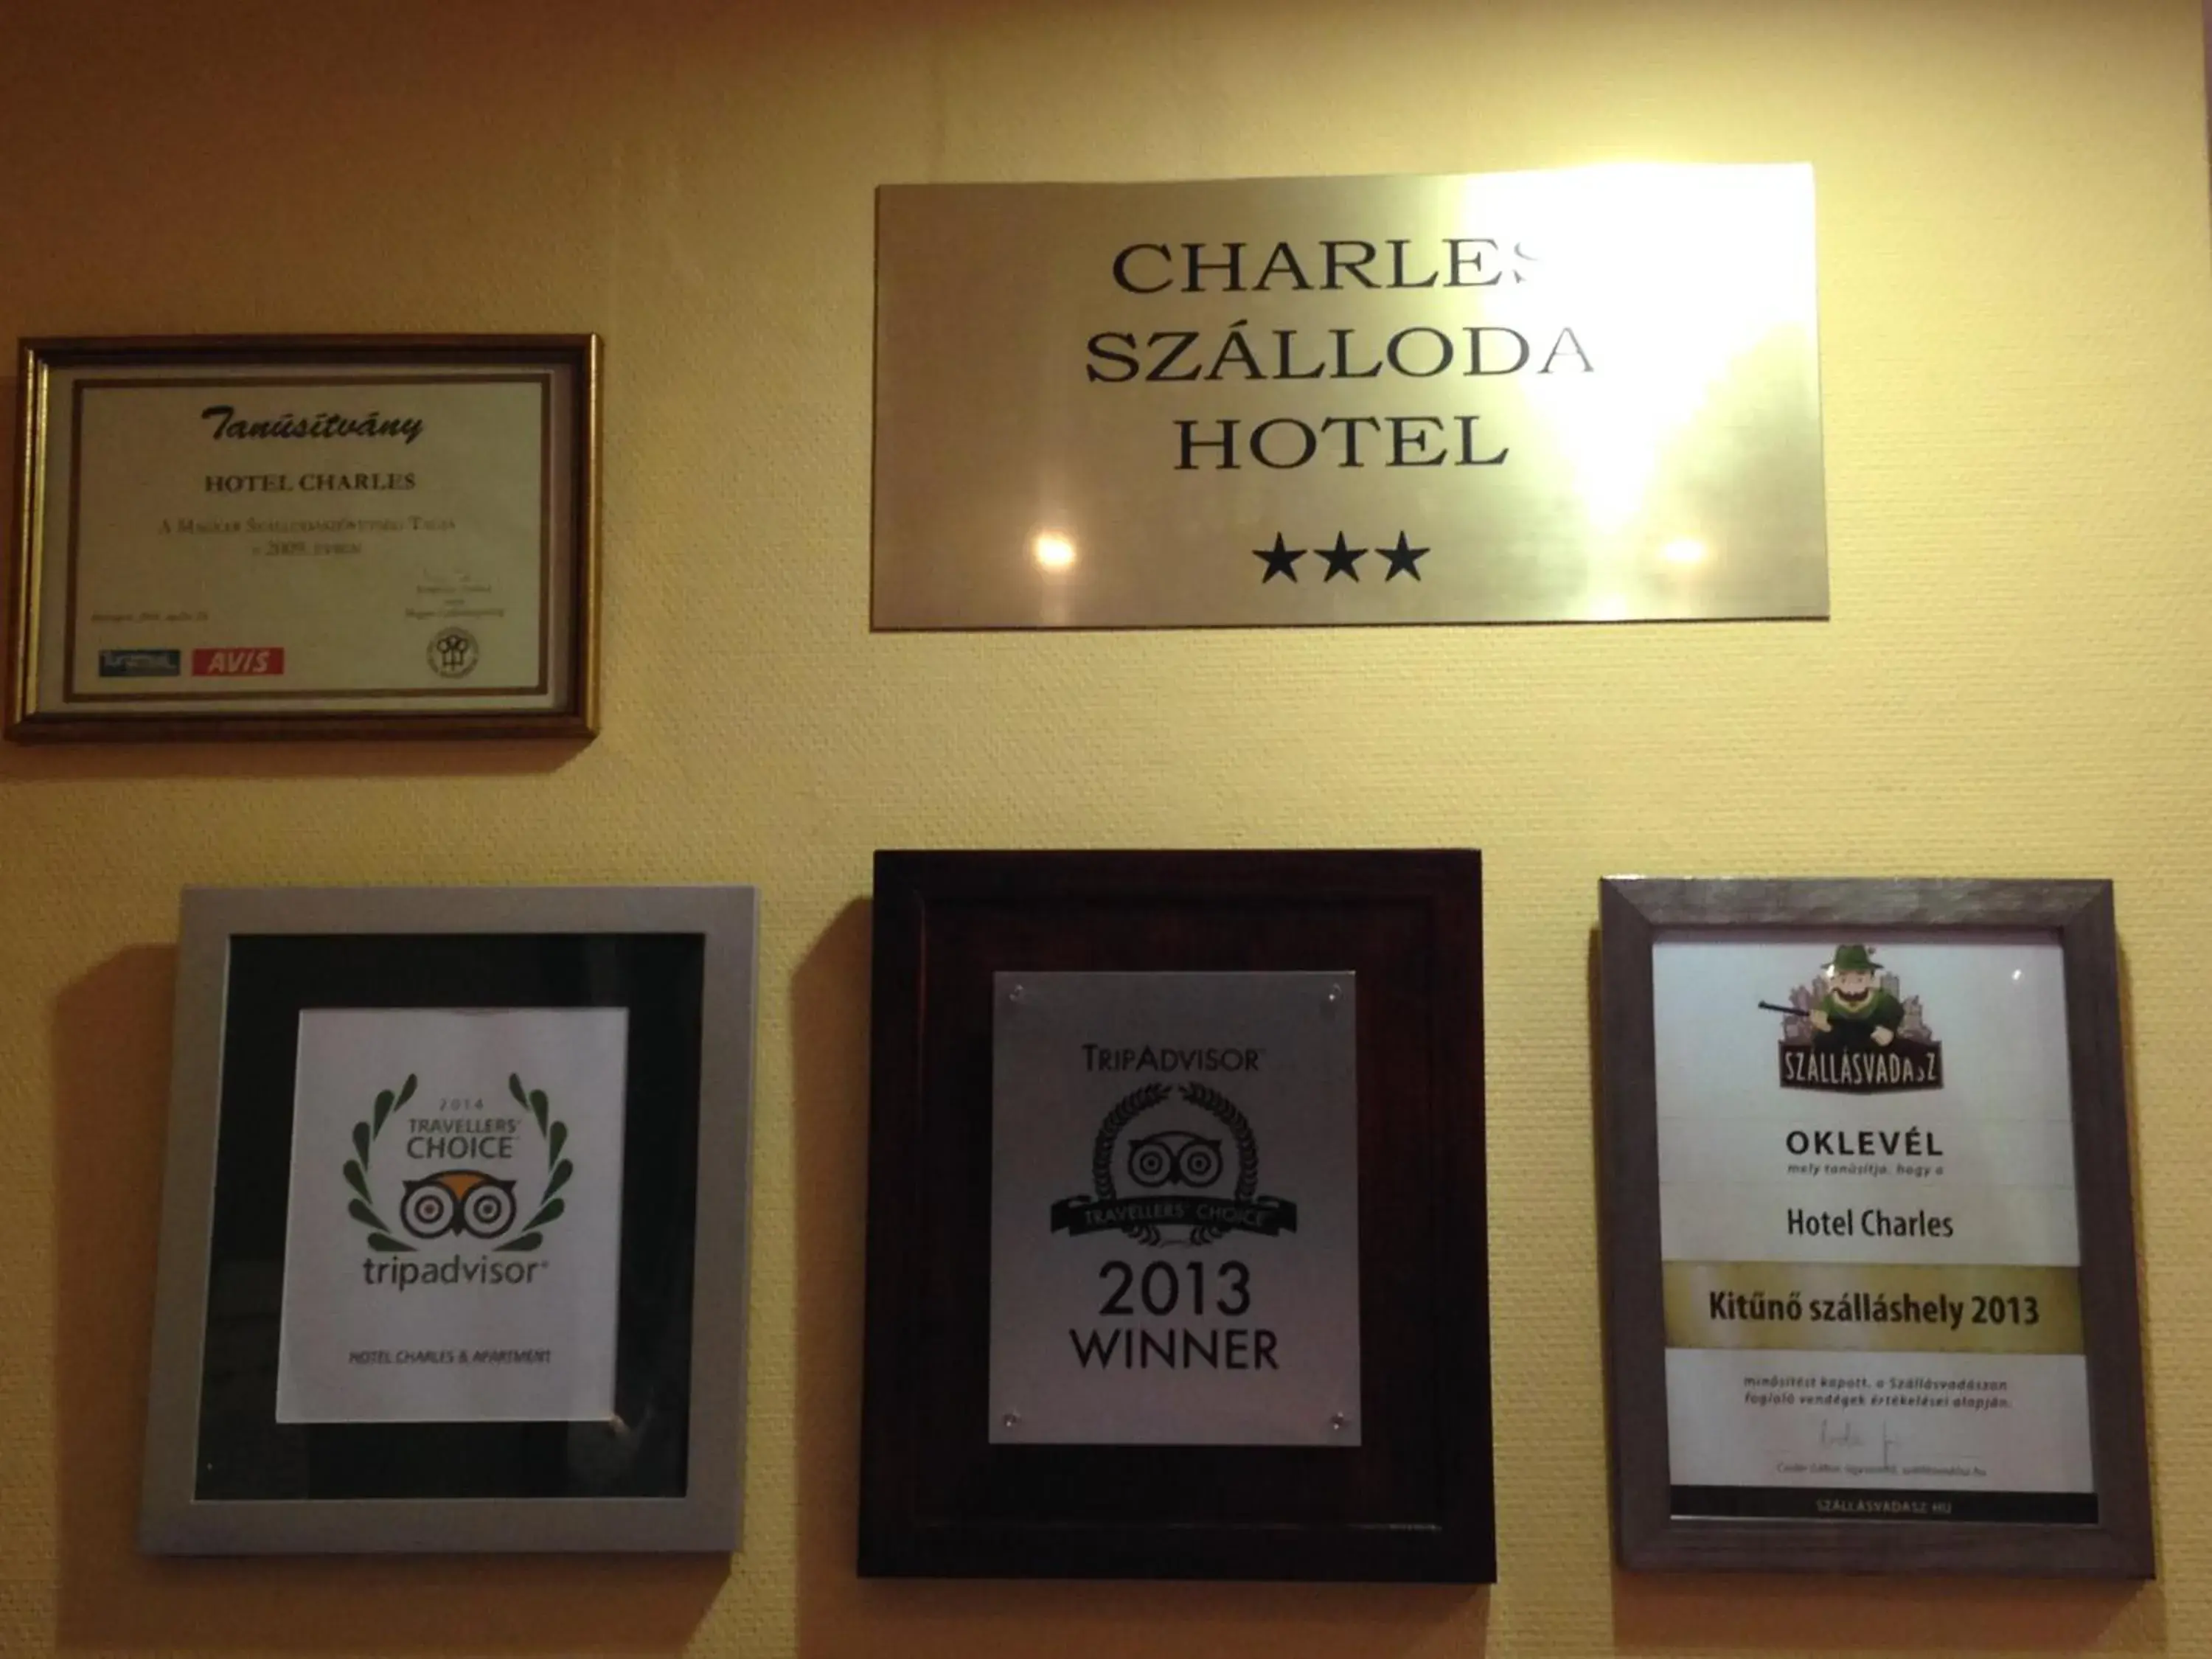 Certificate/Award in Hotel Charles